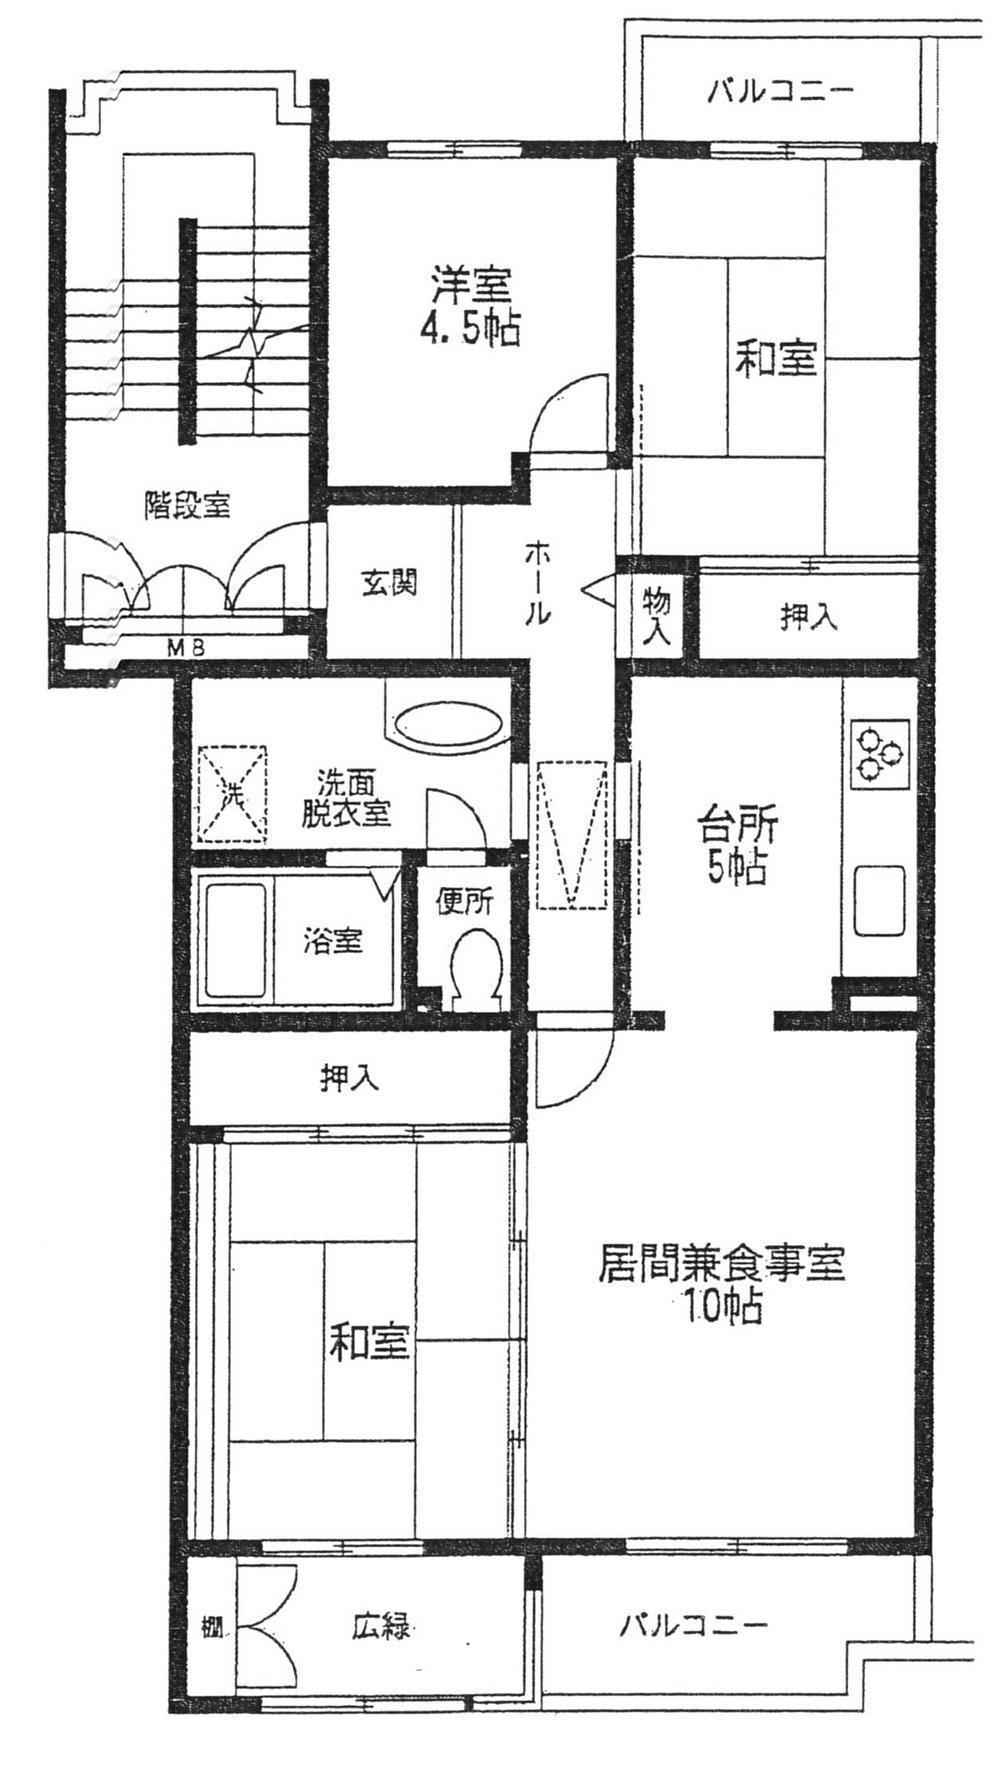 Floor plan. 3LDK, Price 13.8 million yen, Occupied area 83.04 sq m , Balcony area 3.89 sq m